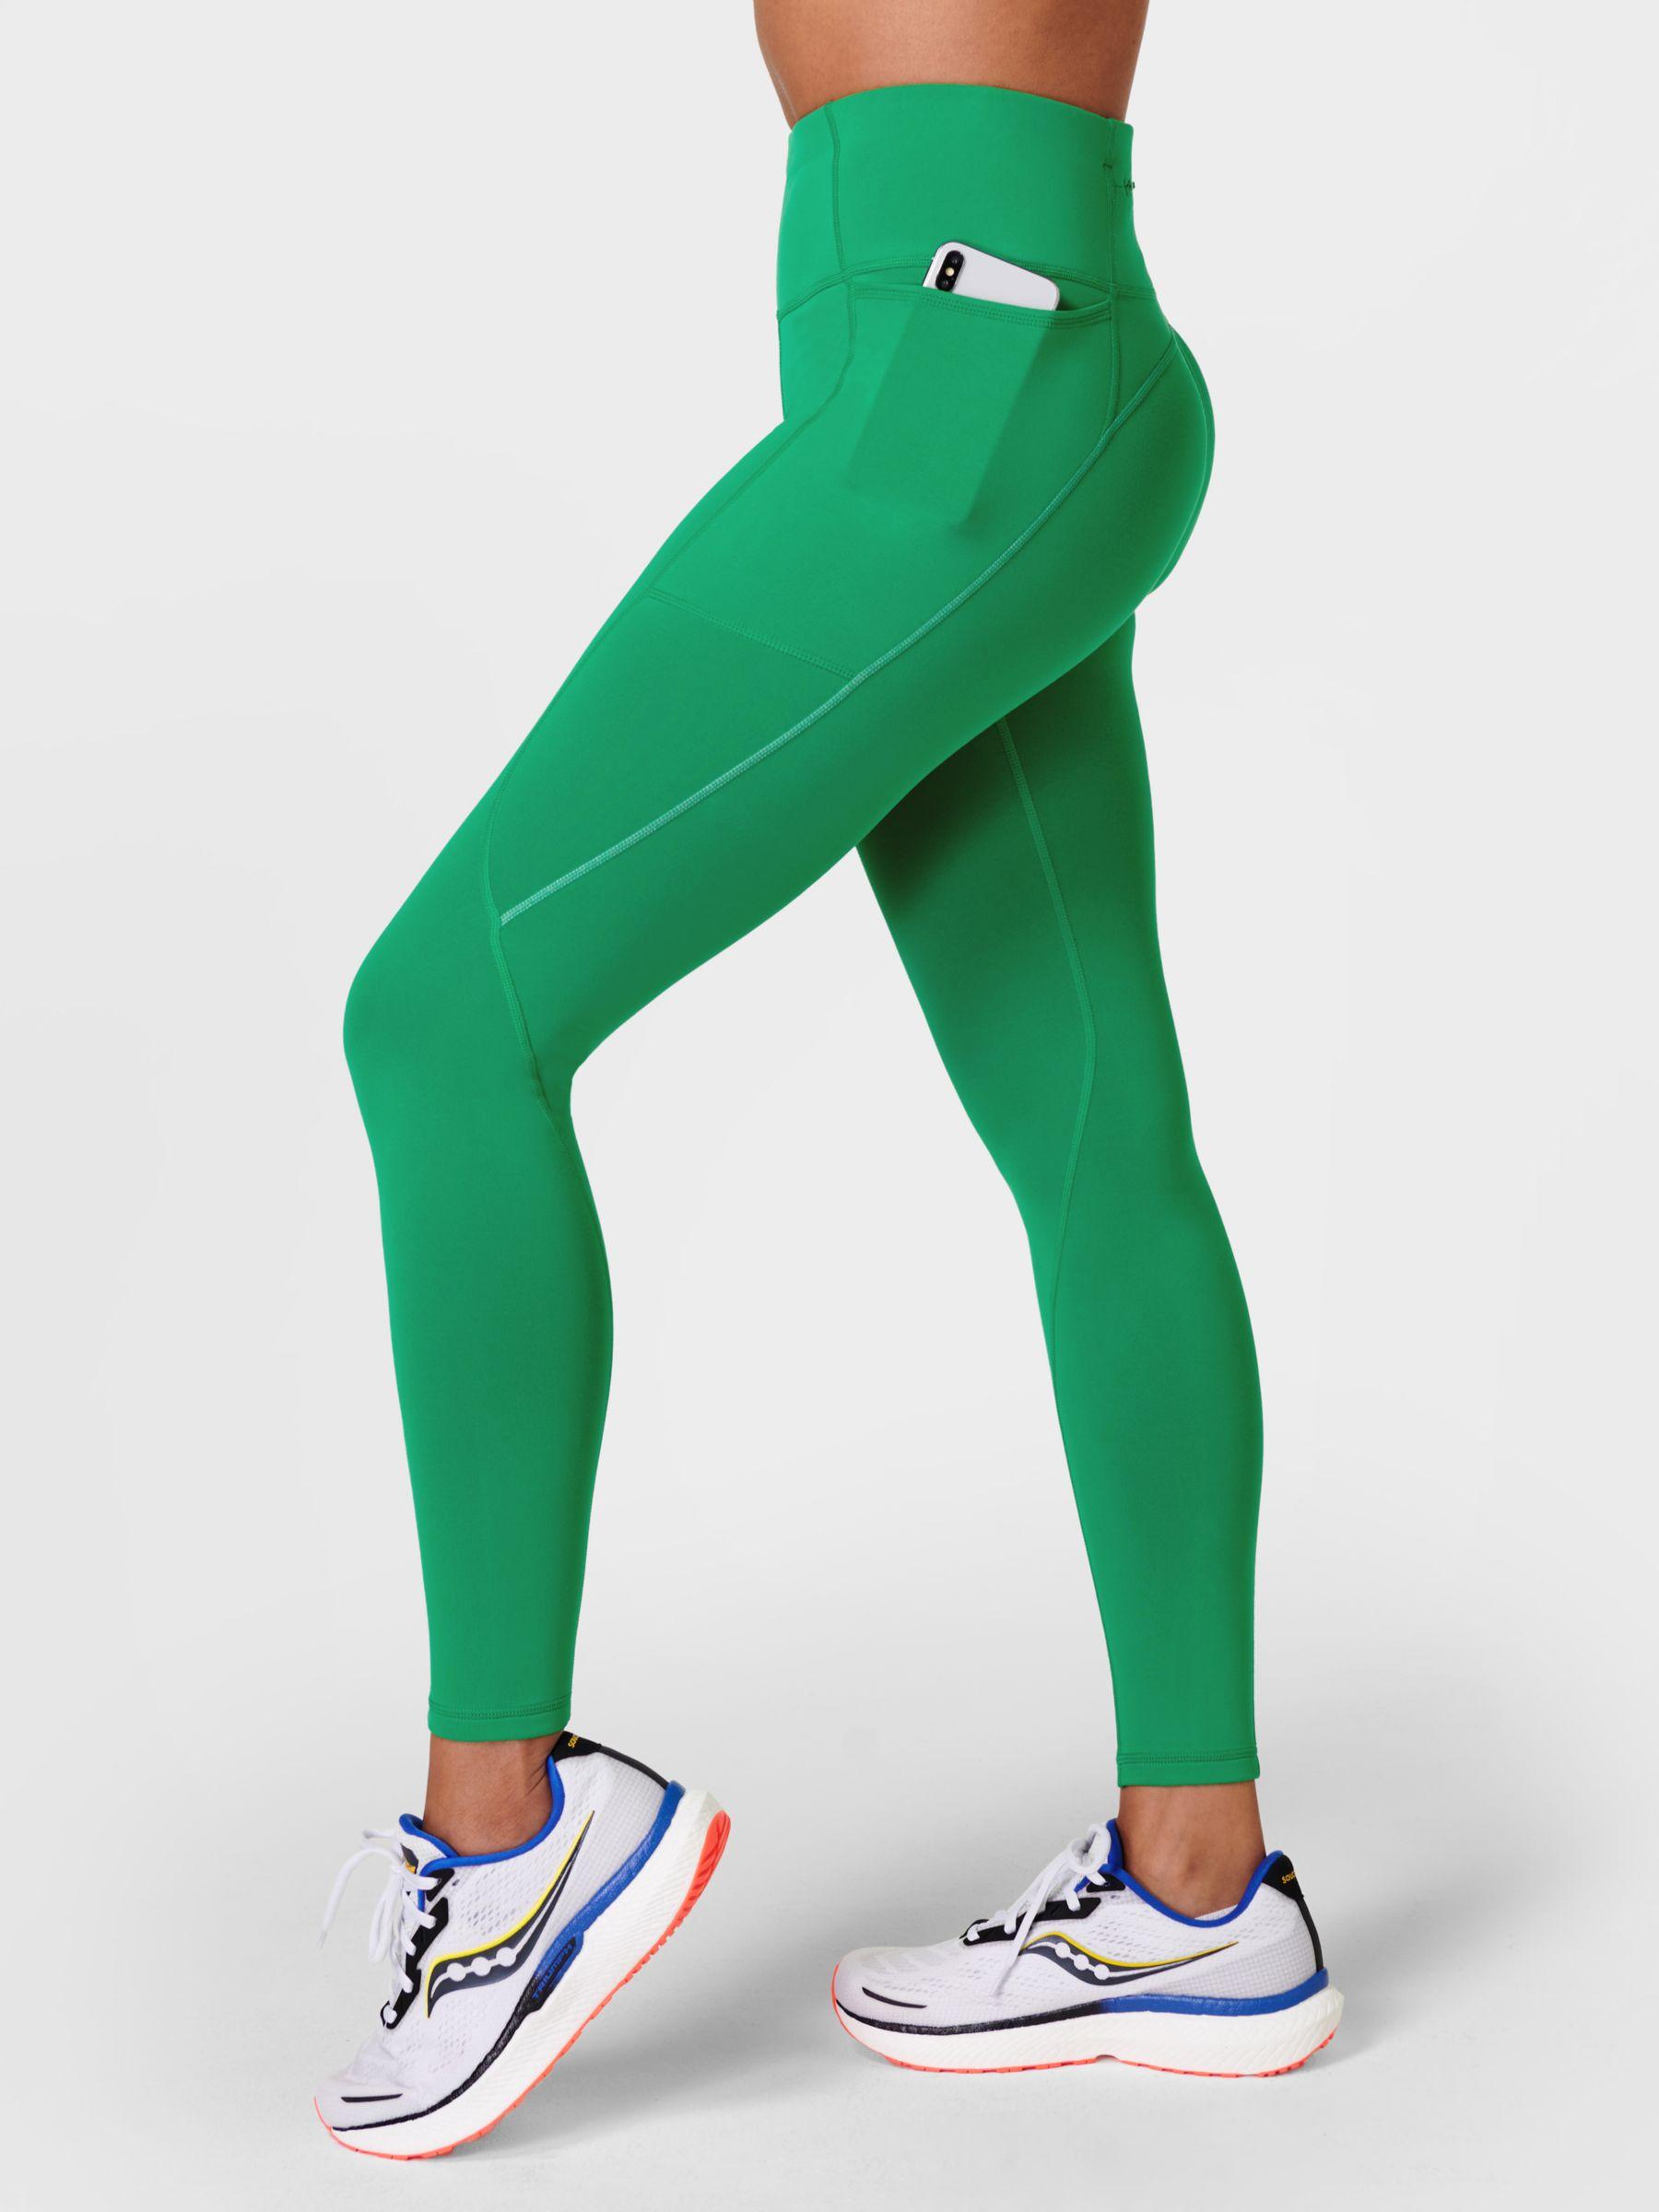 Therma Boost 2.0 Reflective Running Leggings - Grey SB Dot Reflective Print, Women's Leggings